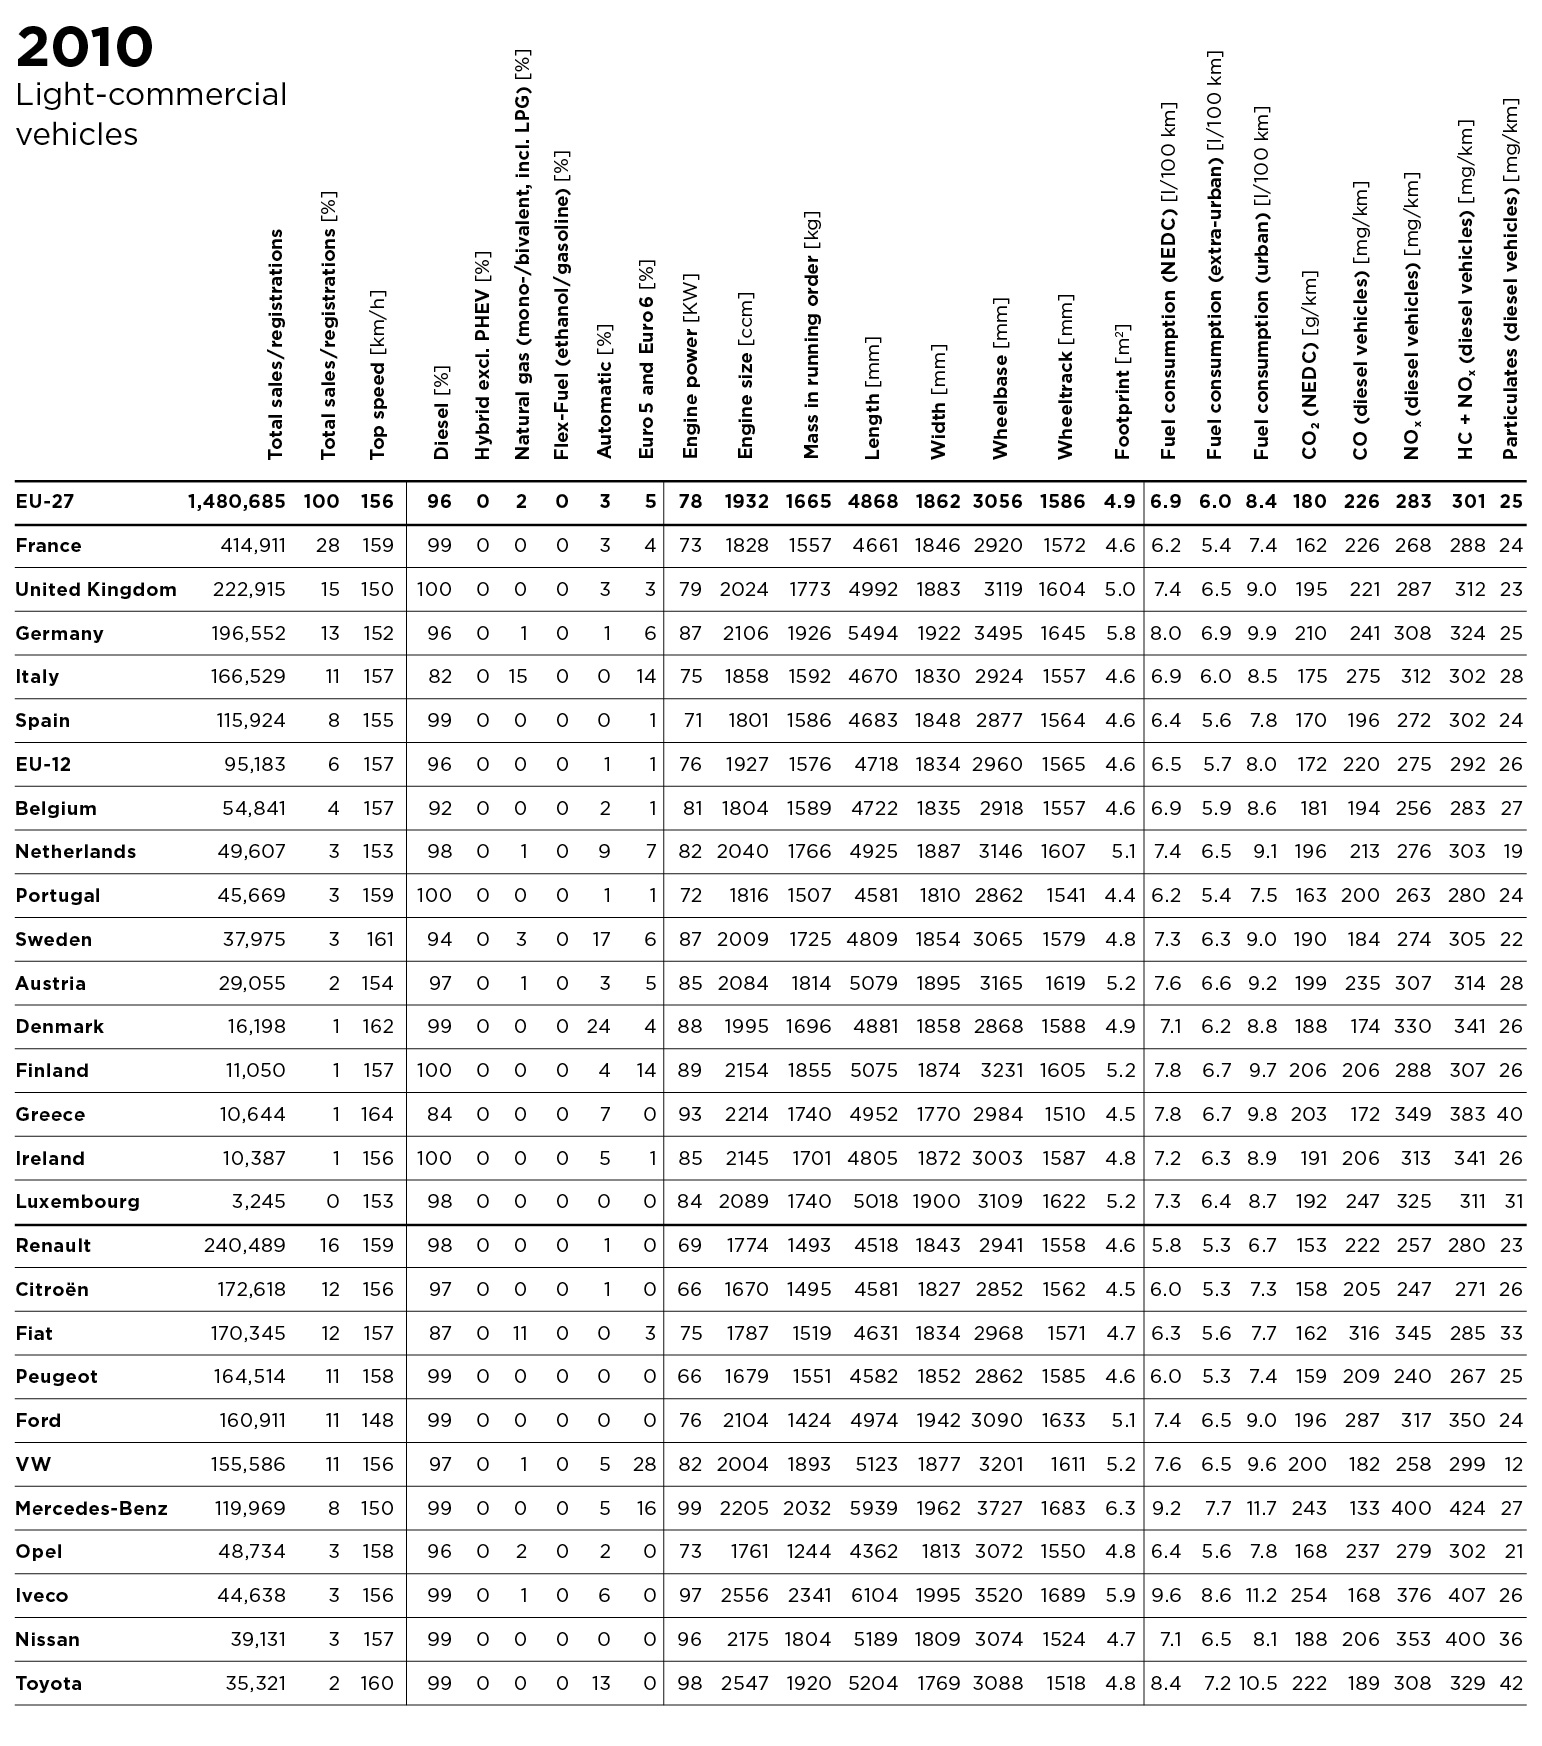 LCV 2010 data